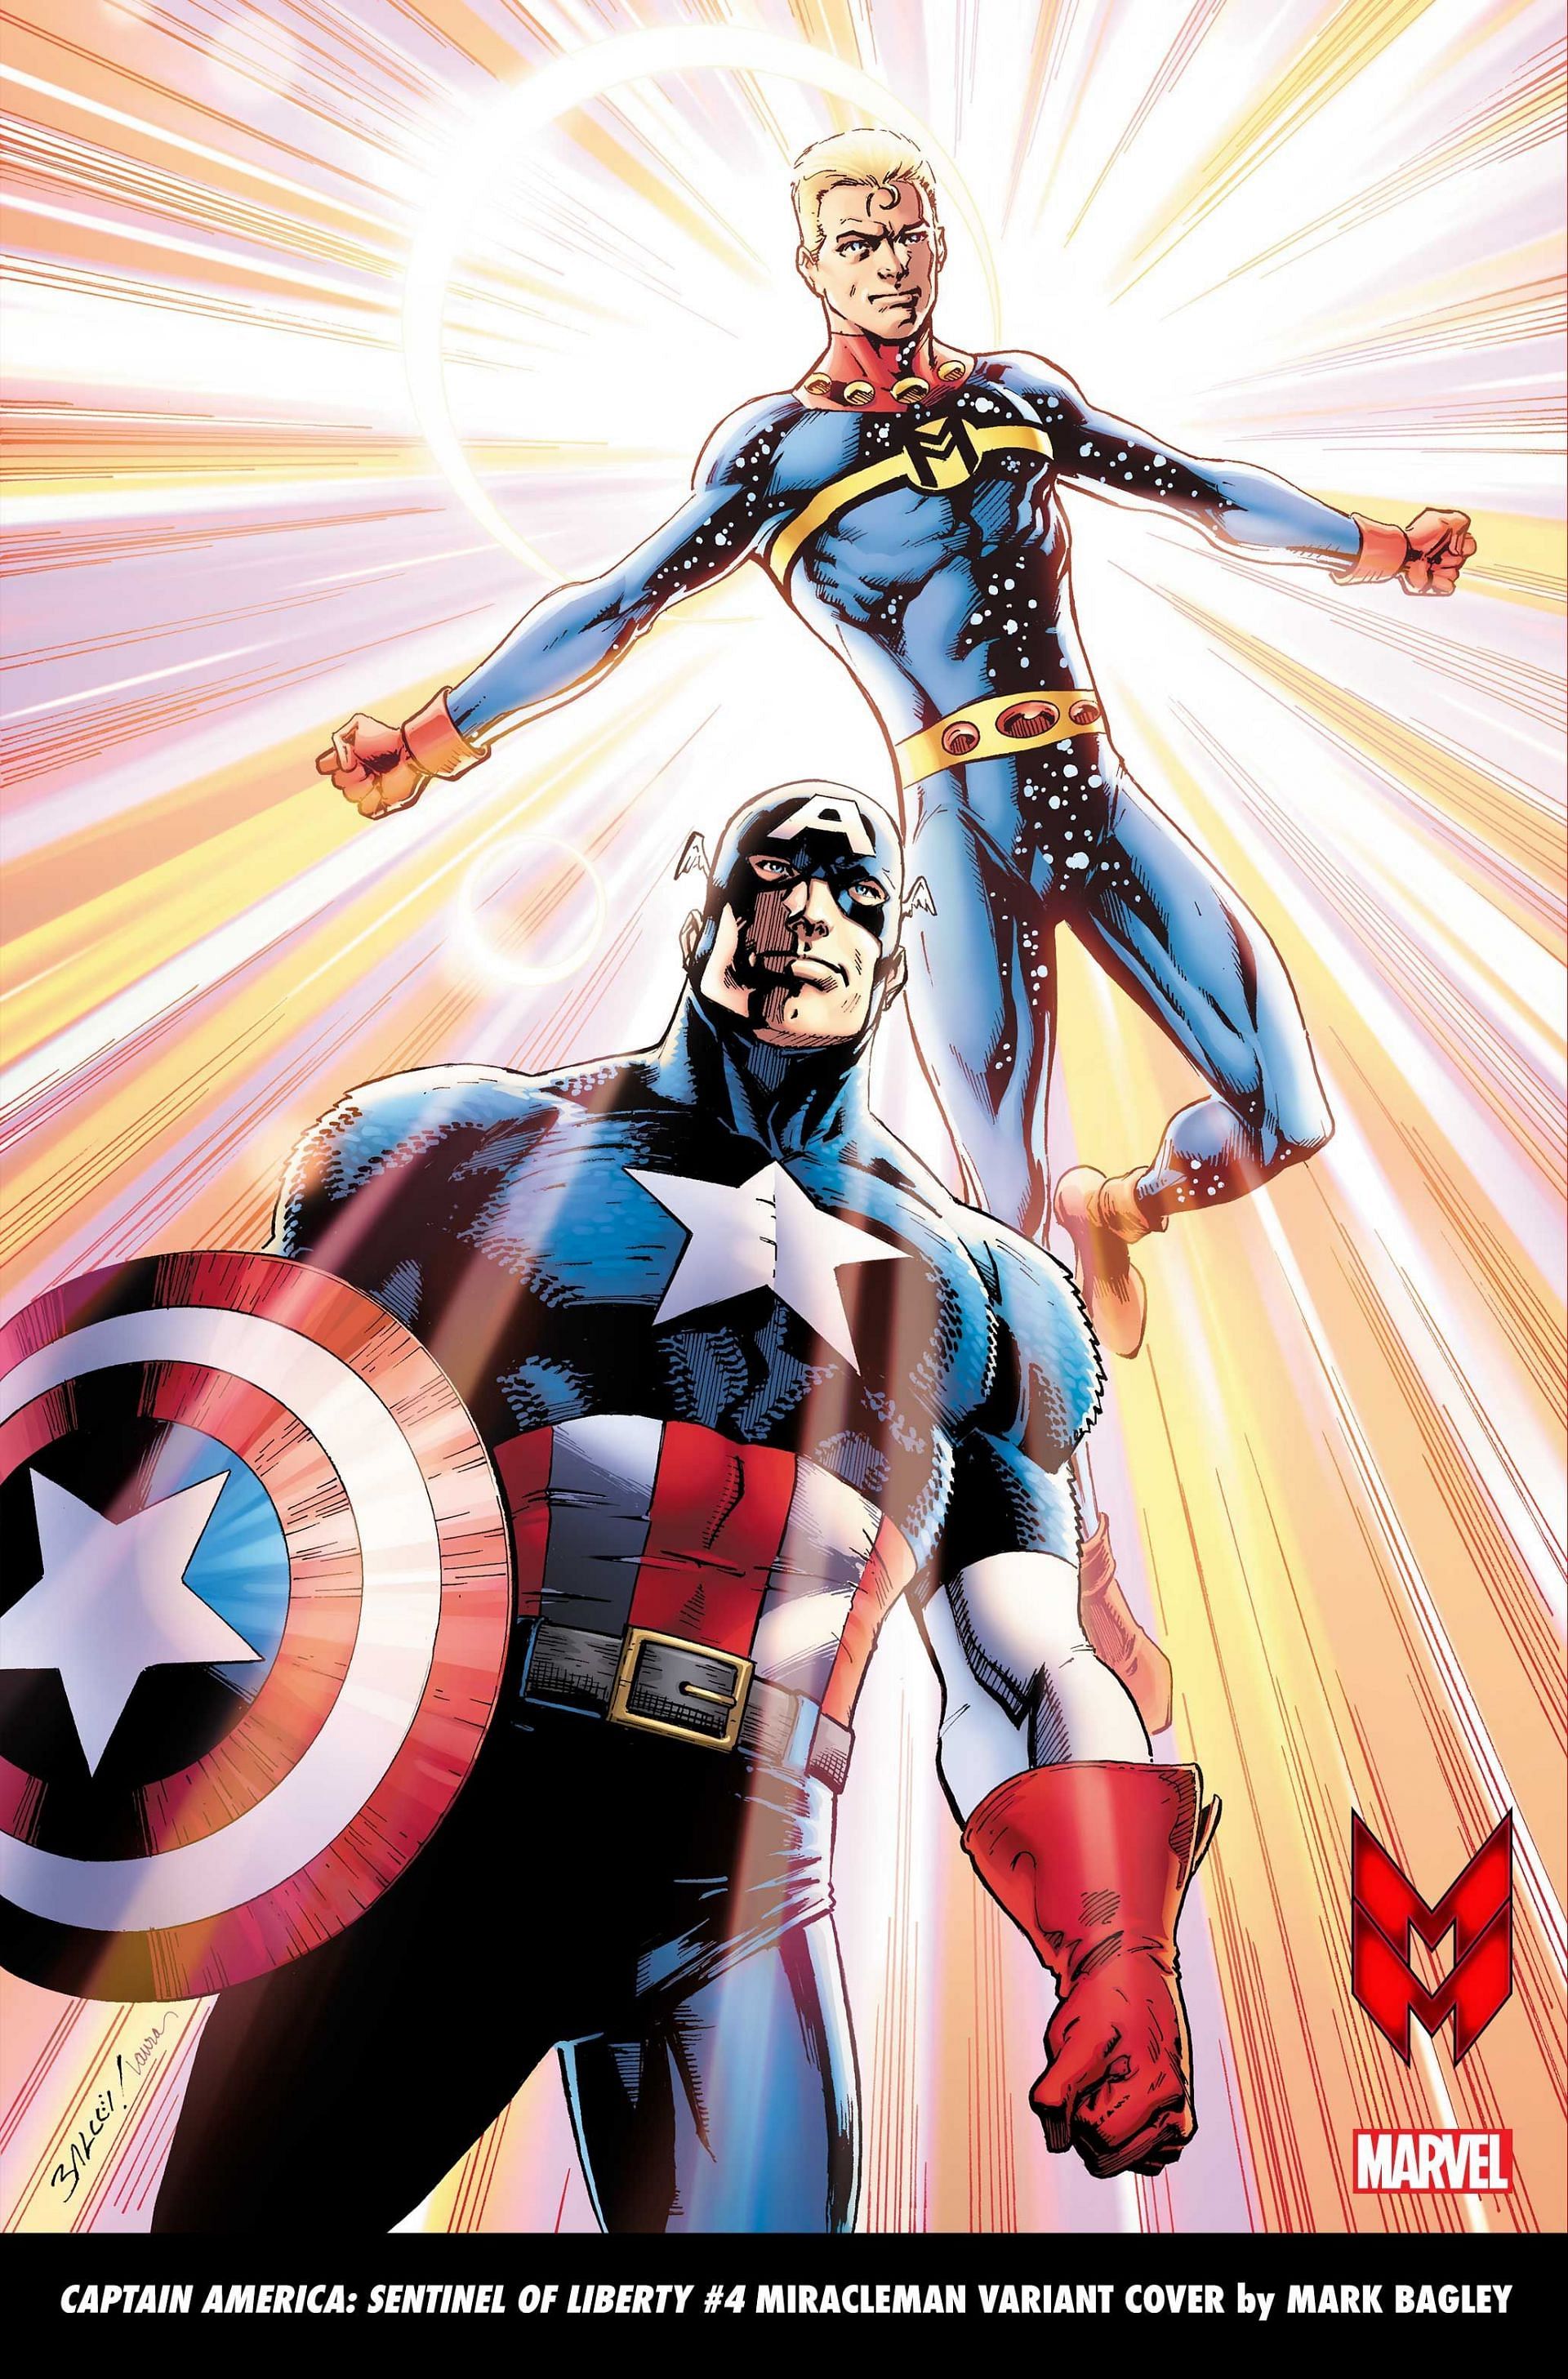 Comic cover (Image via Marvel Comics)